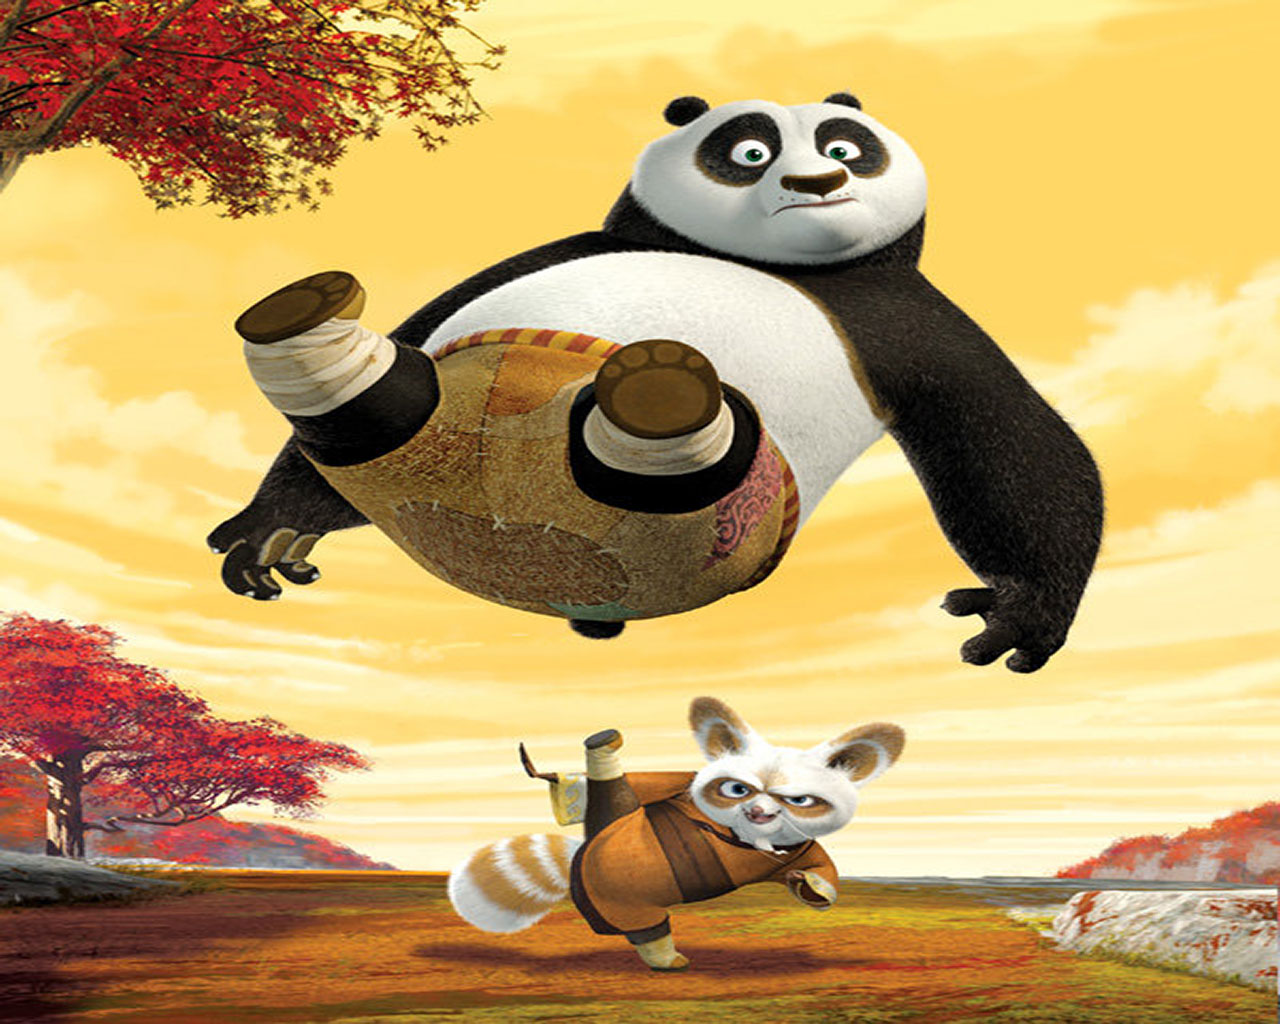 1482975 Bild herunterladen filme, kung fu panda, po (kung fu panda), shifu (kung fu panda) - Hintergrundbilder und Bildschirmschoner kostenlos